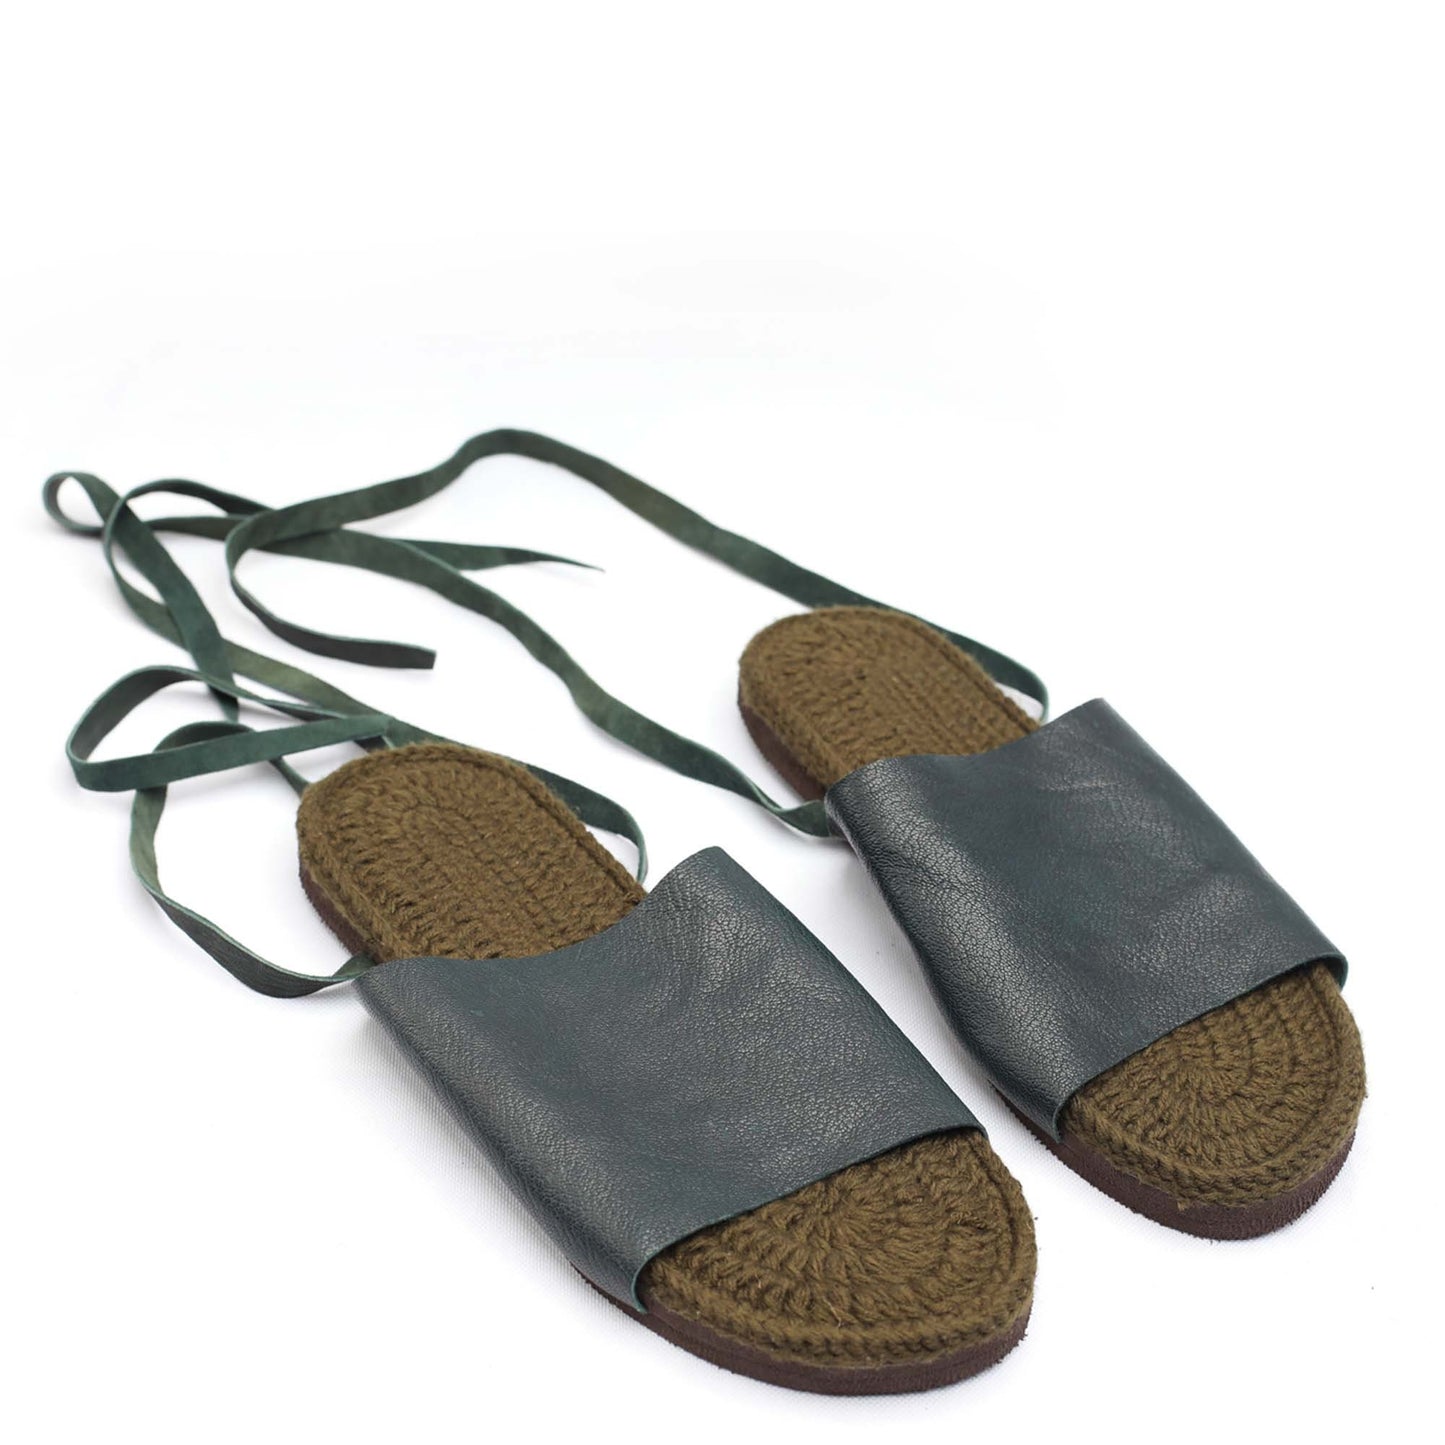 Selen - flat stylish leather lace up sandals